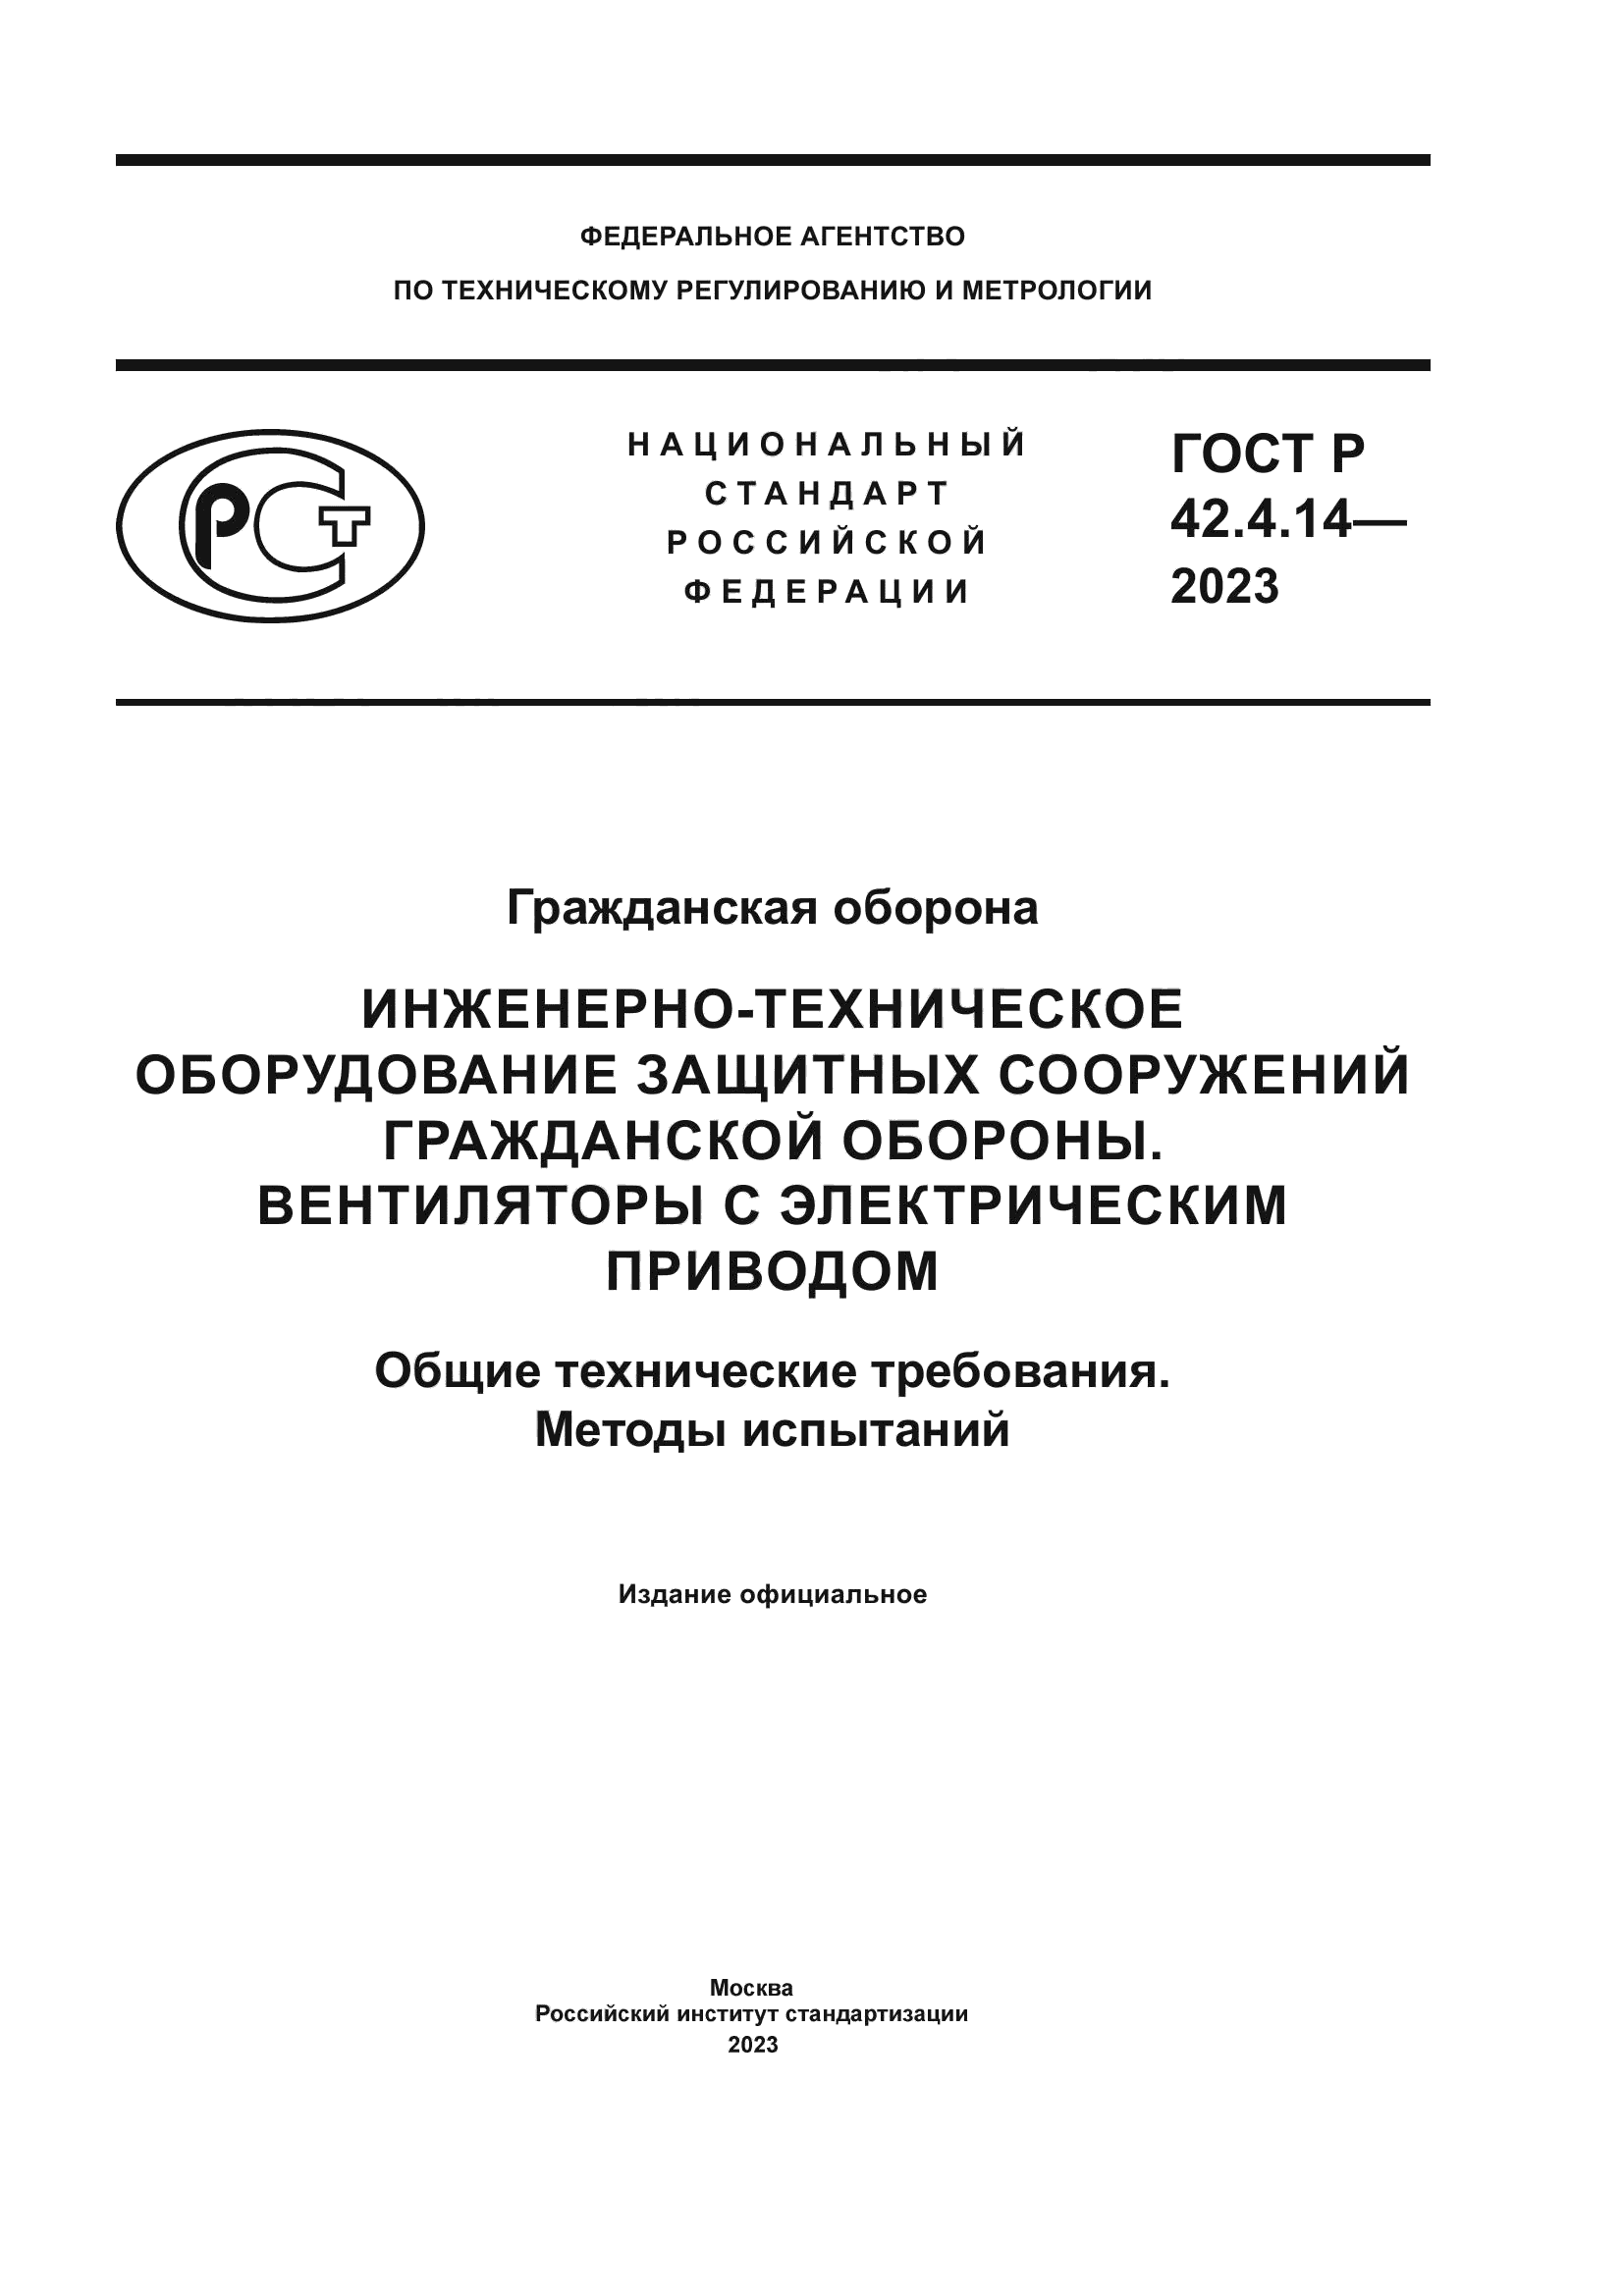 ГОСТ Р 42.4.14-2023